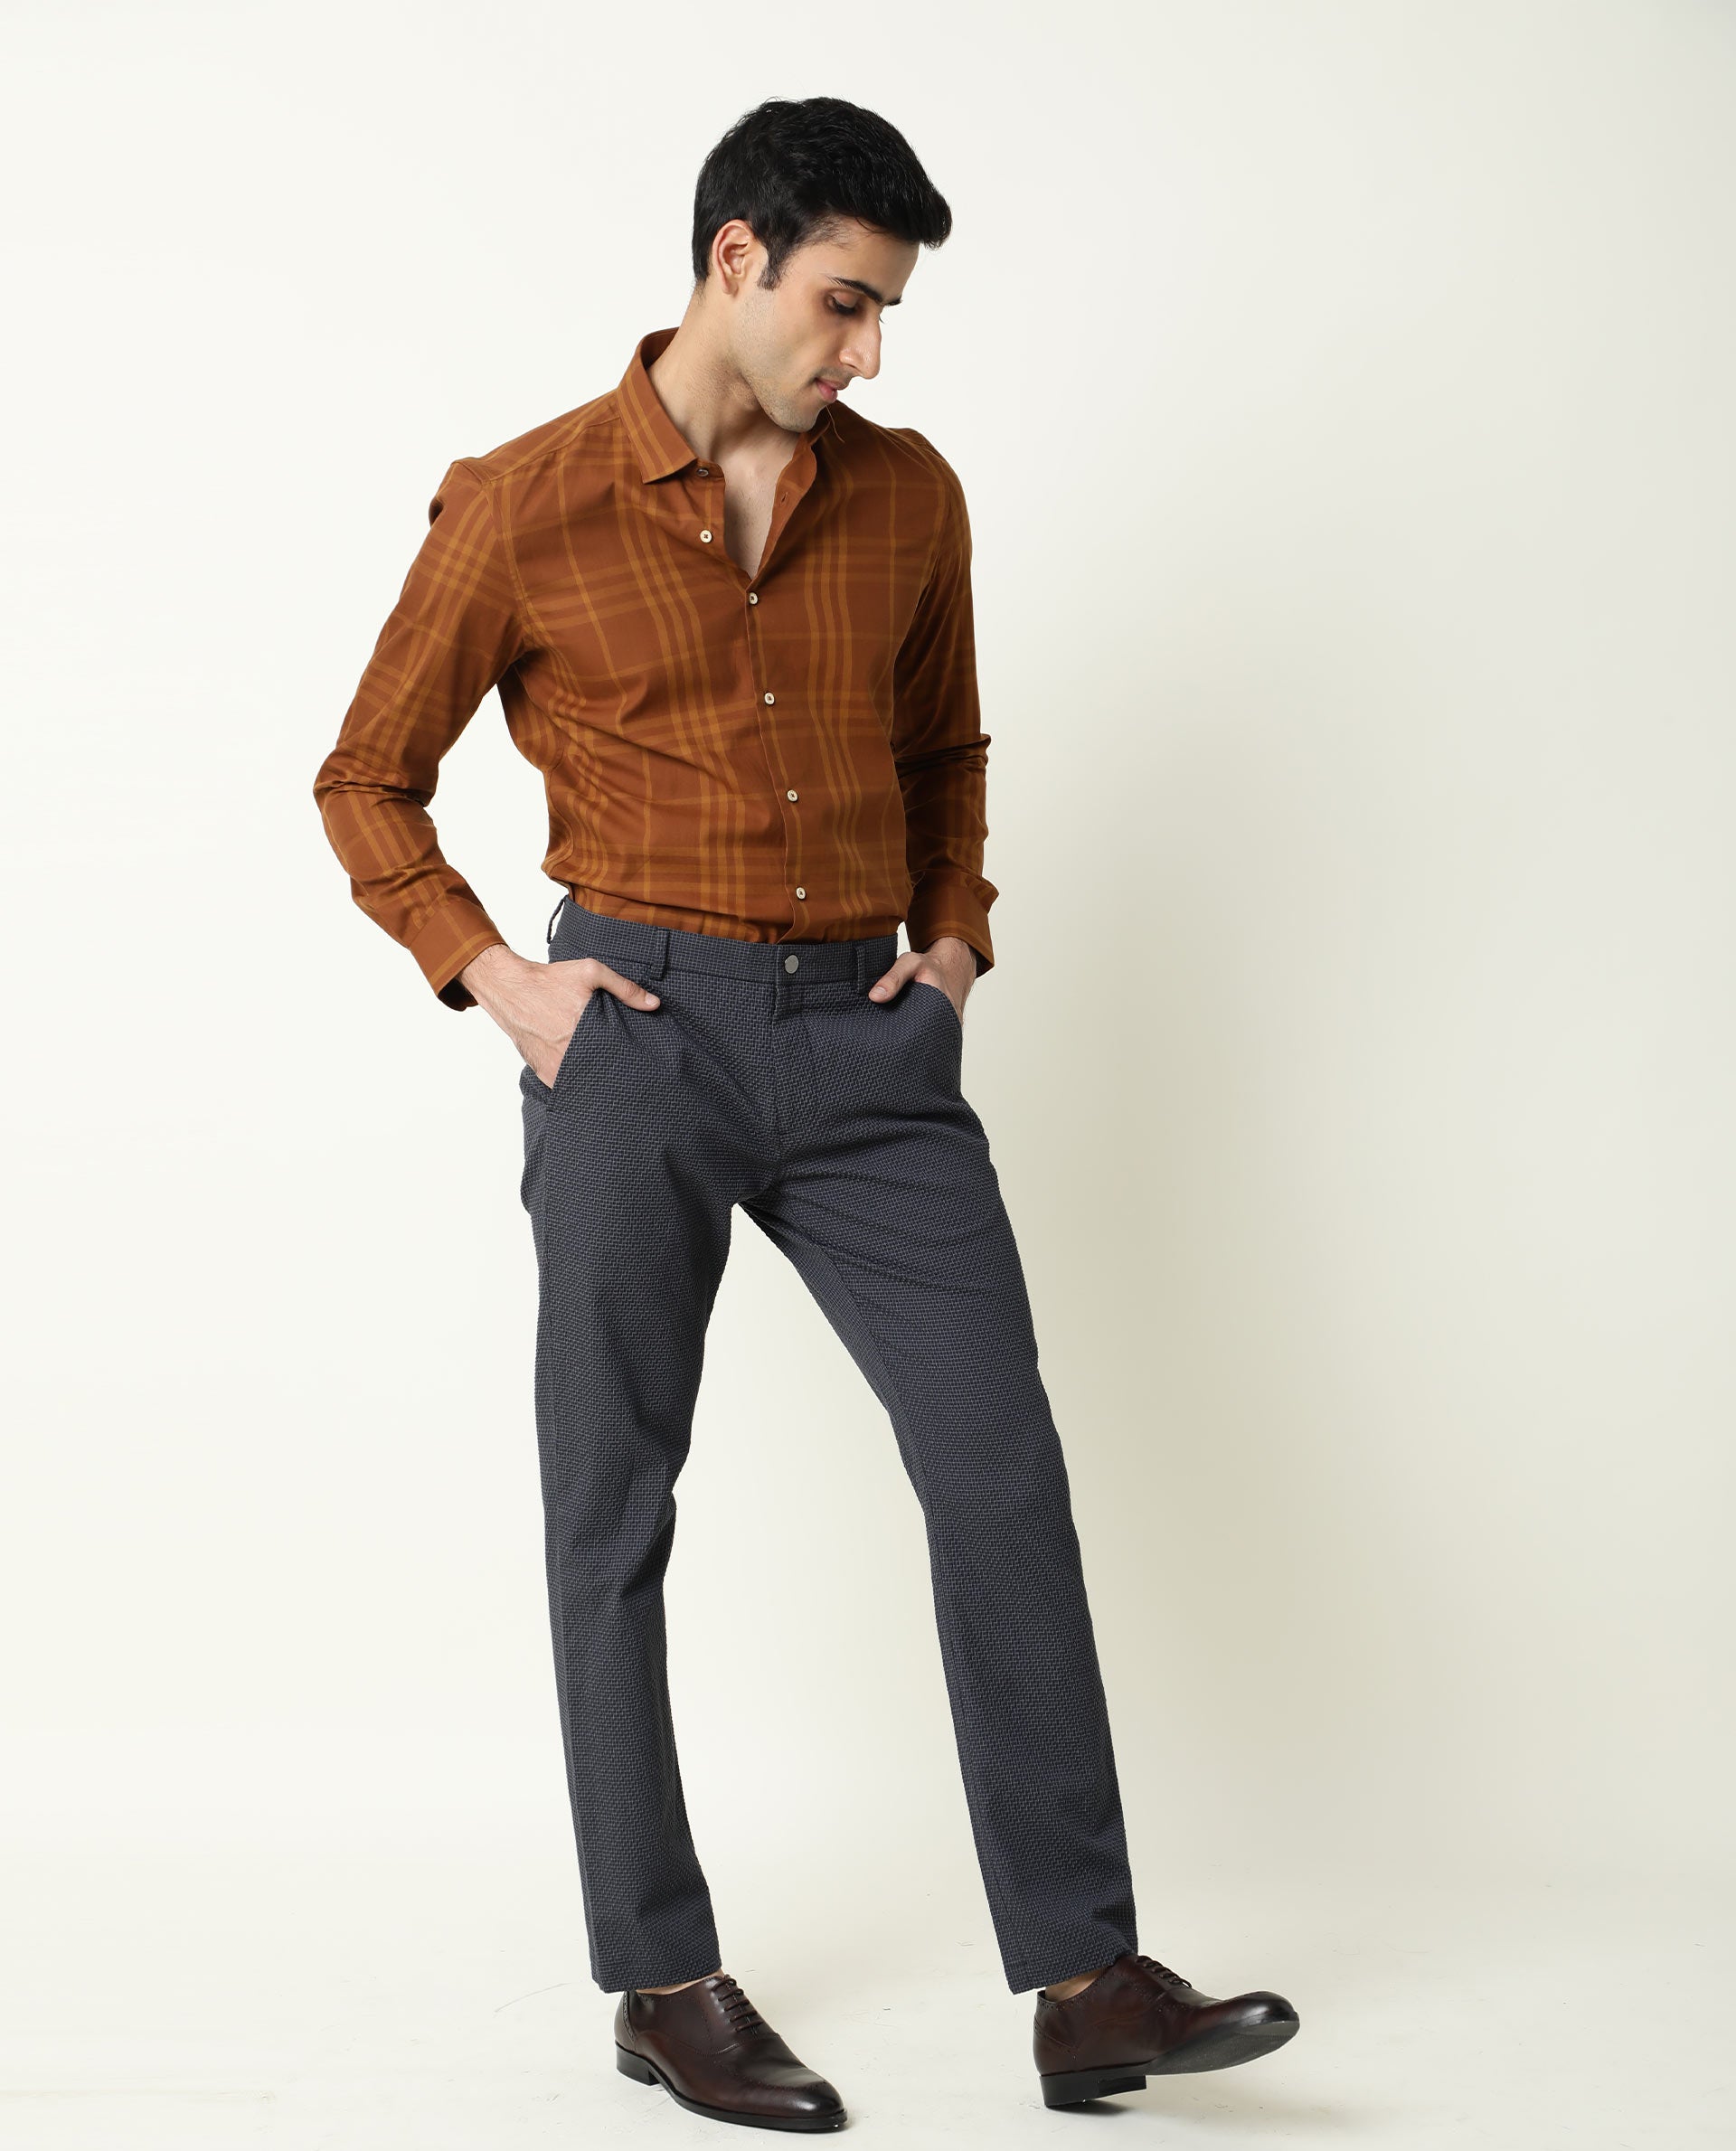 Brown Shirt Matching Pants  Brown Shirts Combination Pant Ideas   TiptopGents